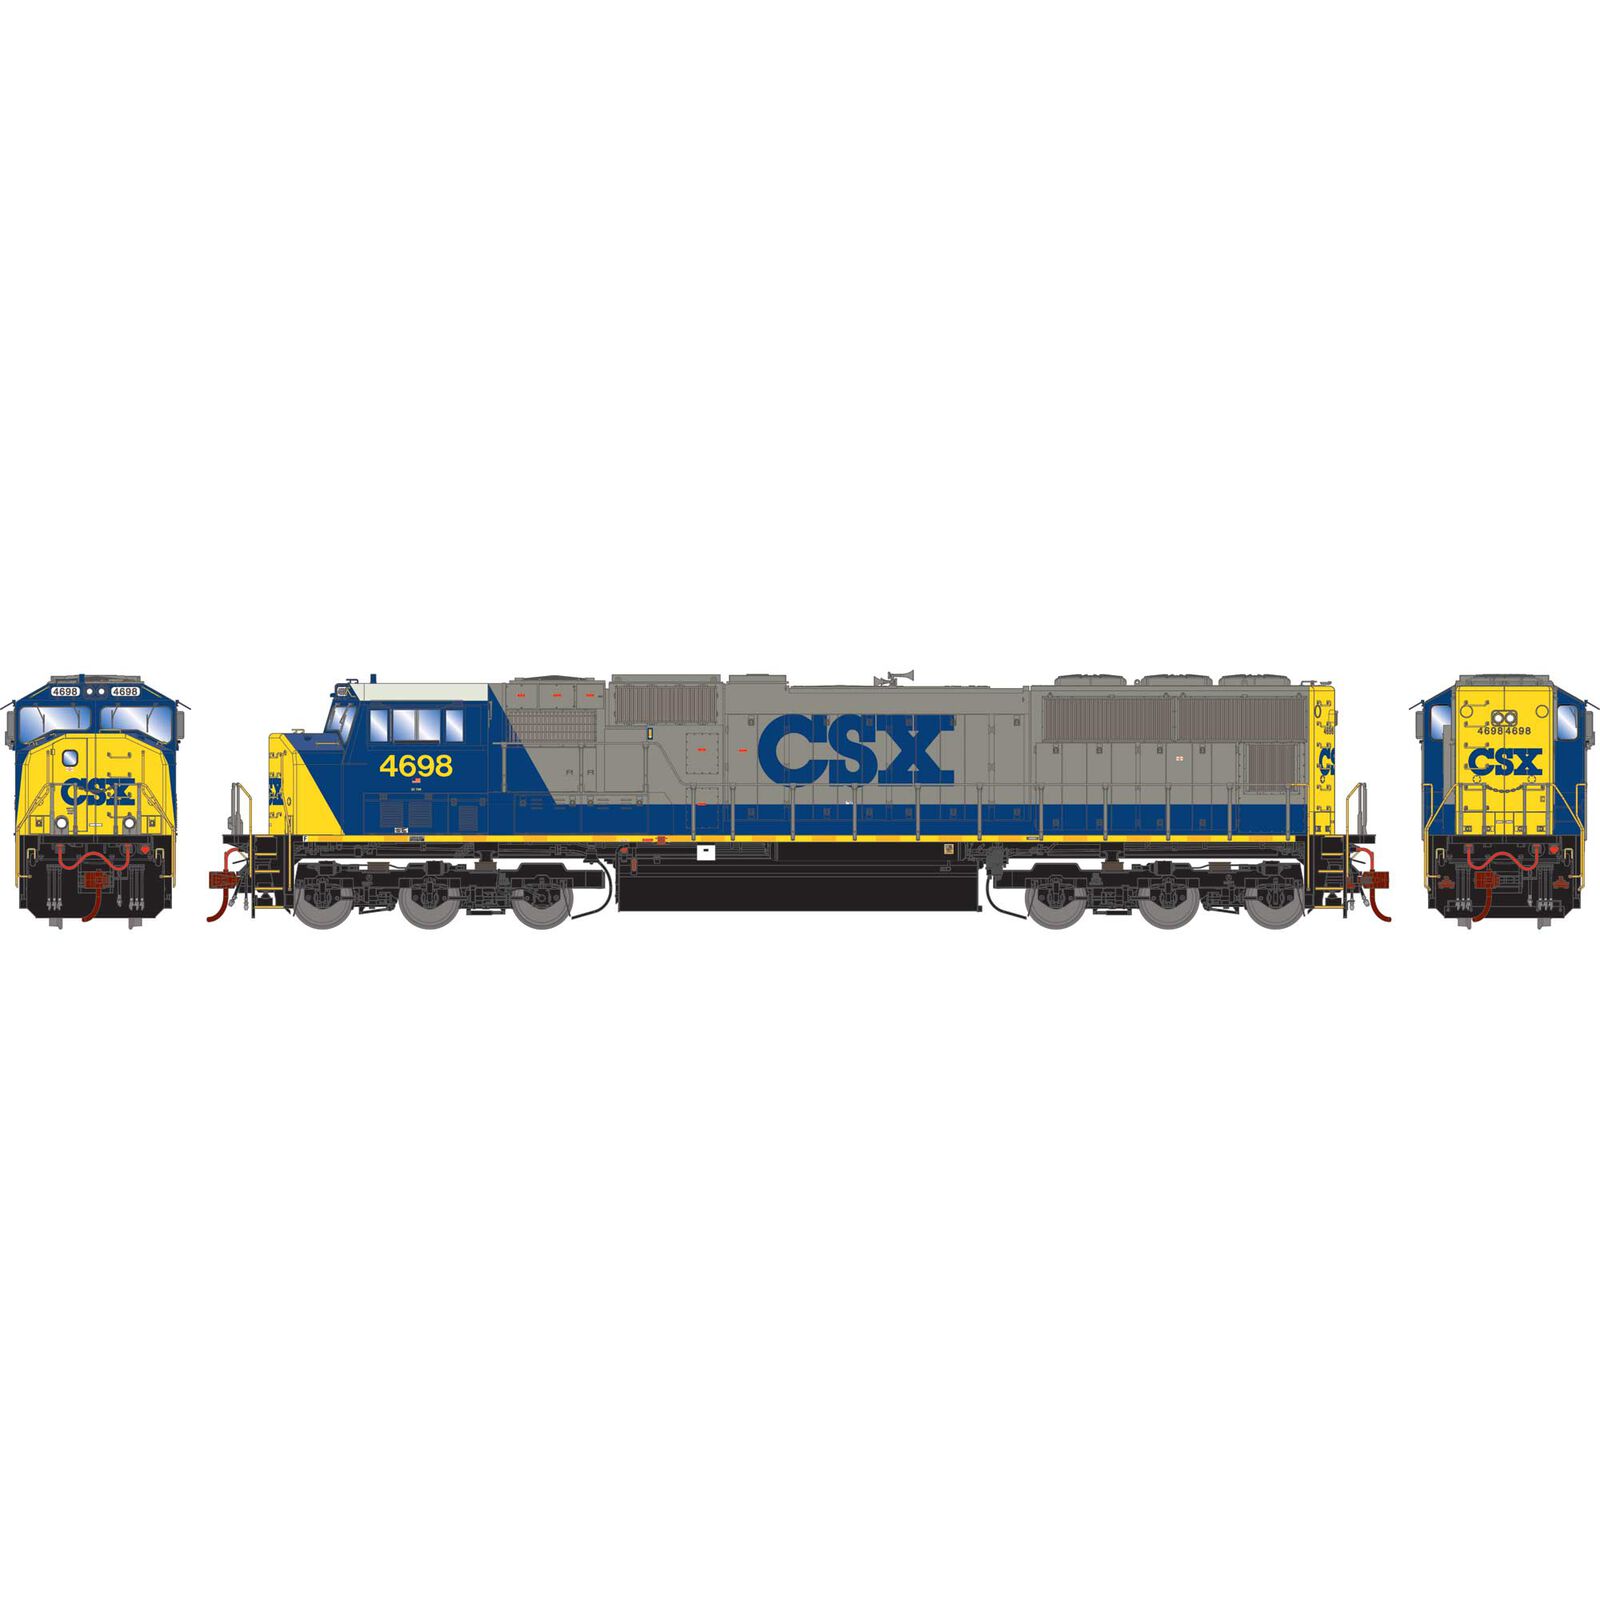 HO SD70M Locomotive with DCC & Sound, CSX / YN2 #4698